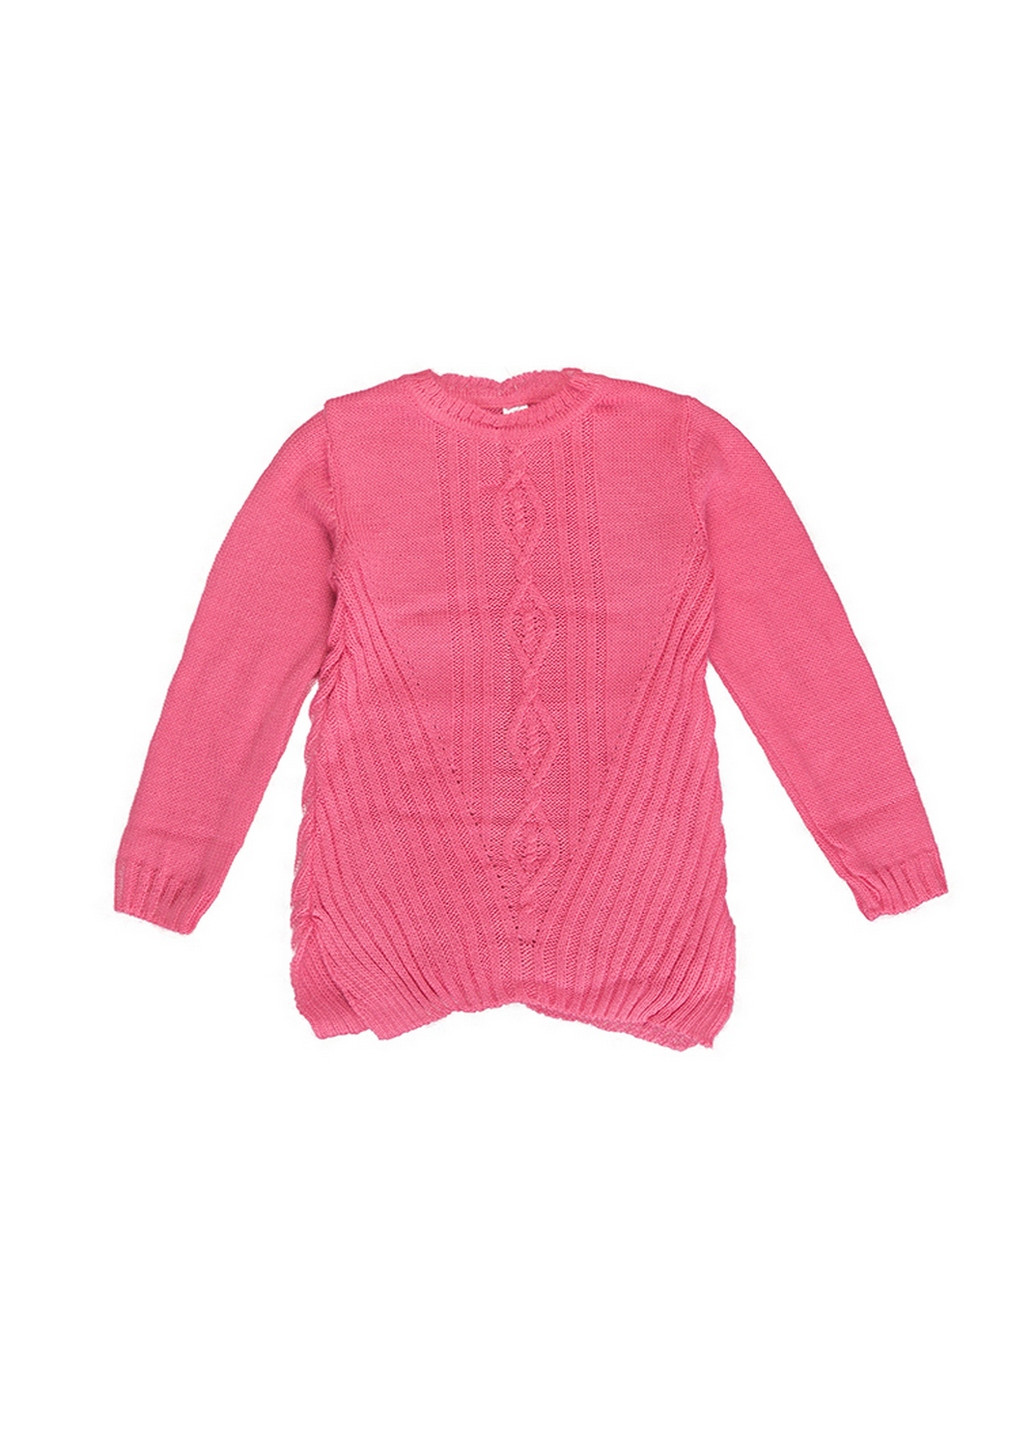 Розовый джемпер джемпер Mari-Knit